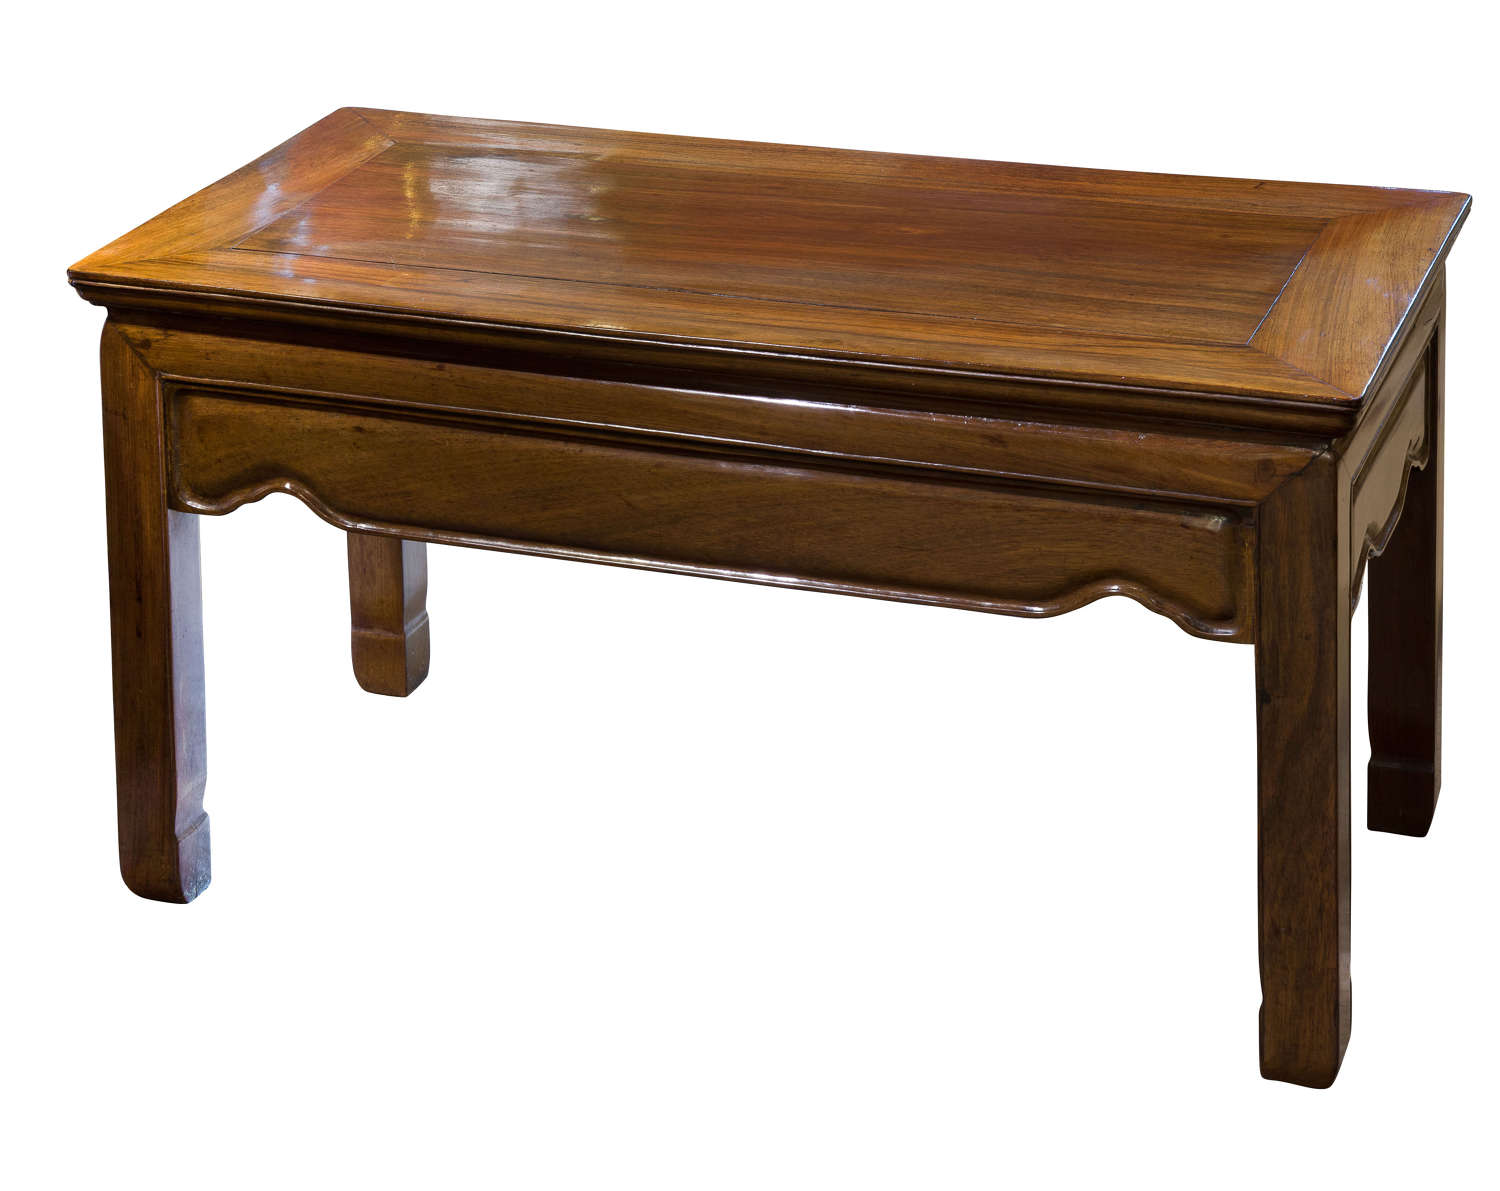 Chinese hardwood low table c1900